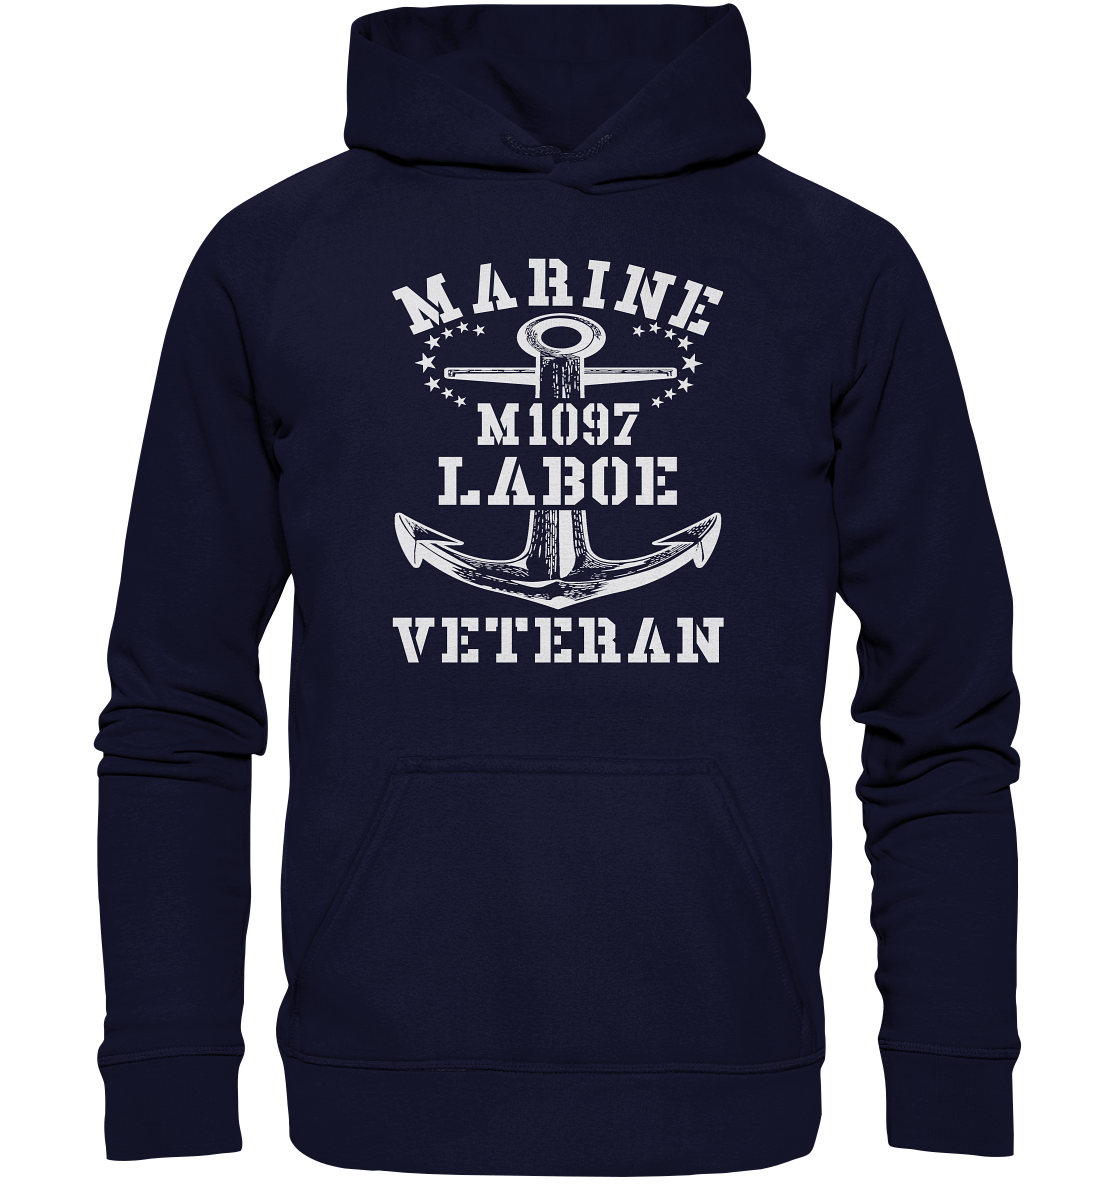 M1097 LABOE Marine Veteran - Basic Unisex Hoodie